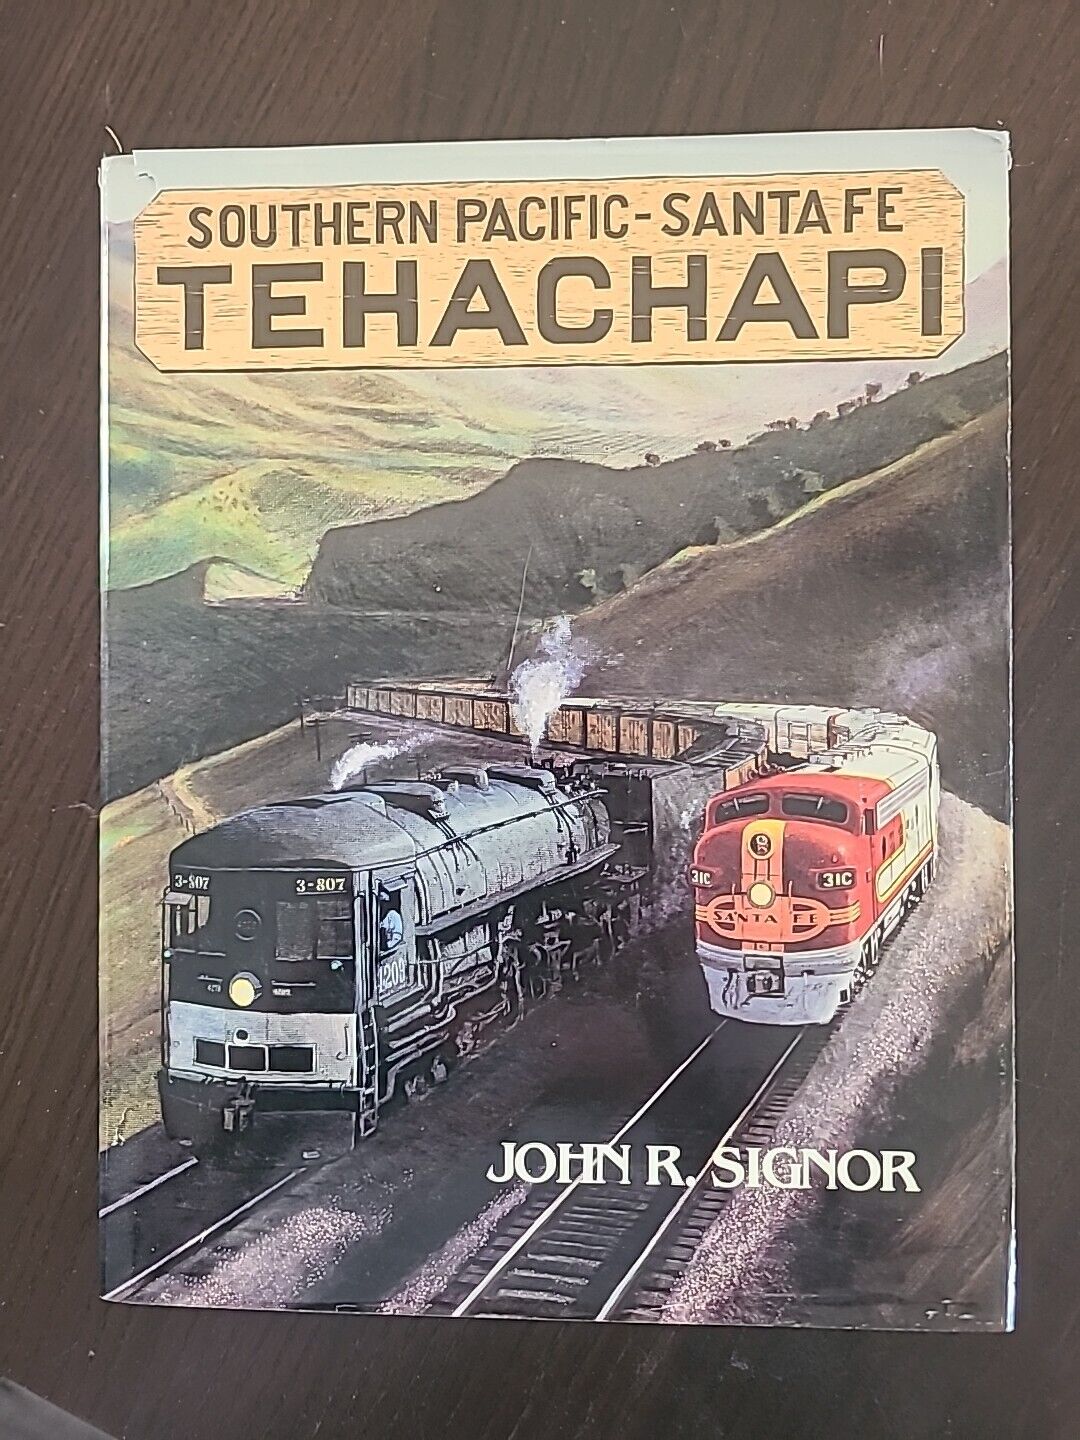 Southern Pacific - Santa Fe Techachapi